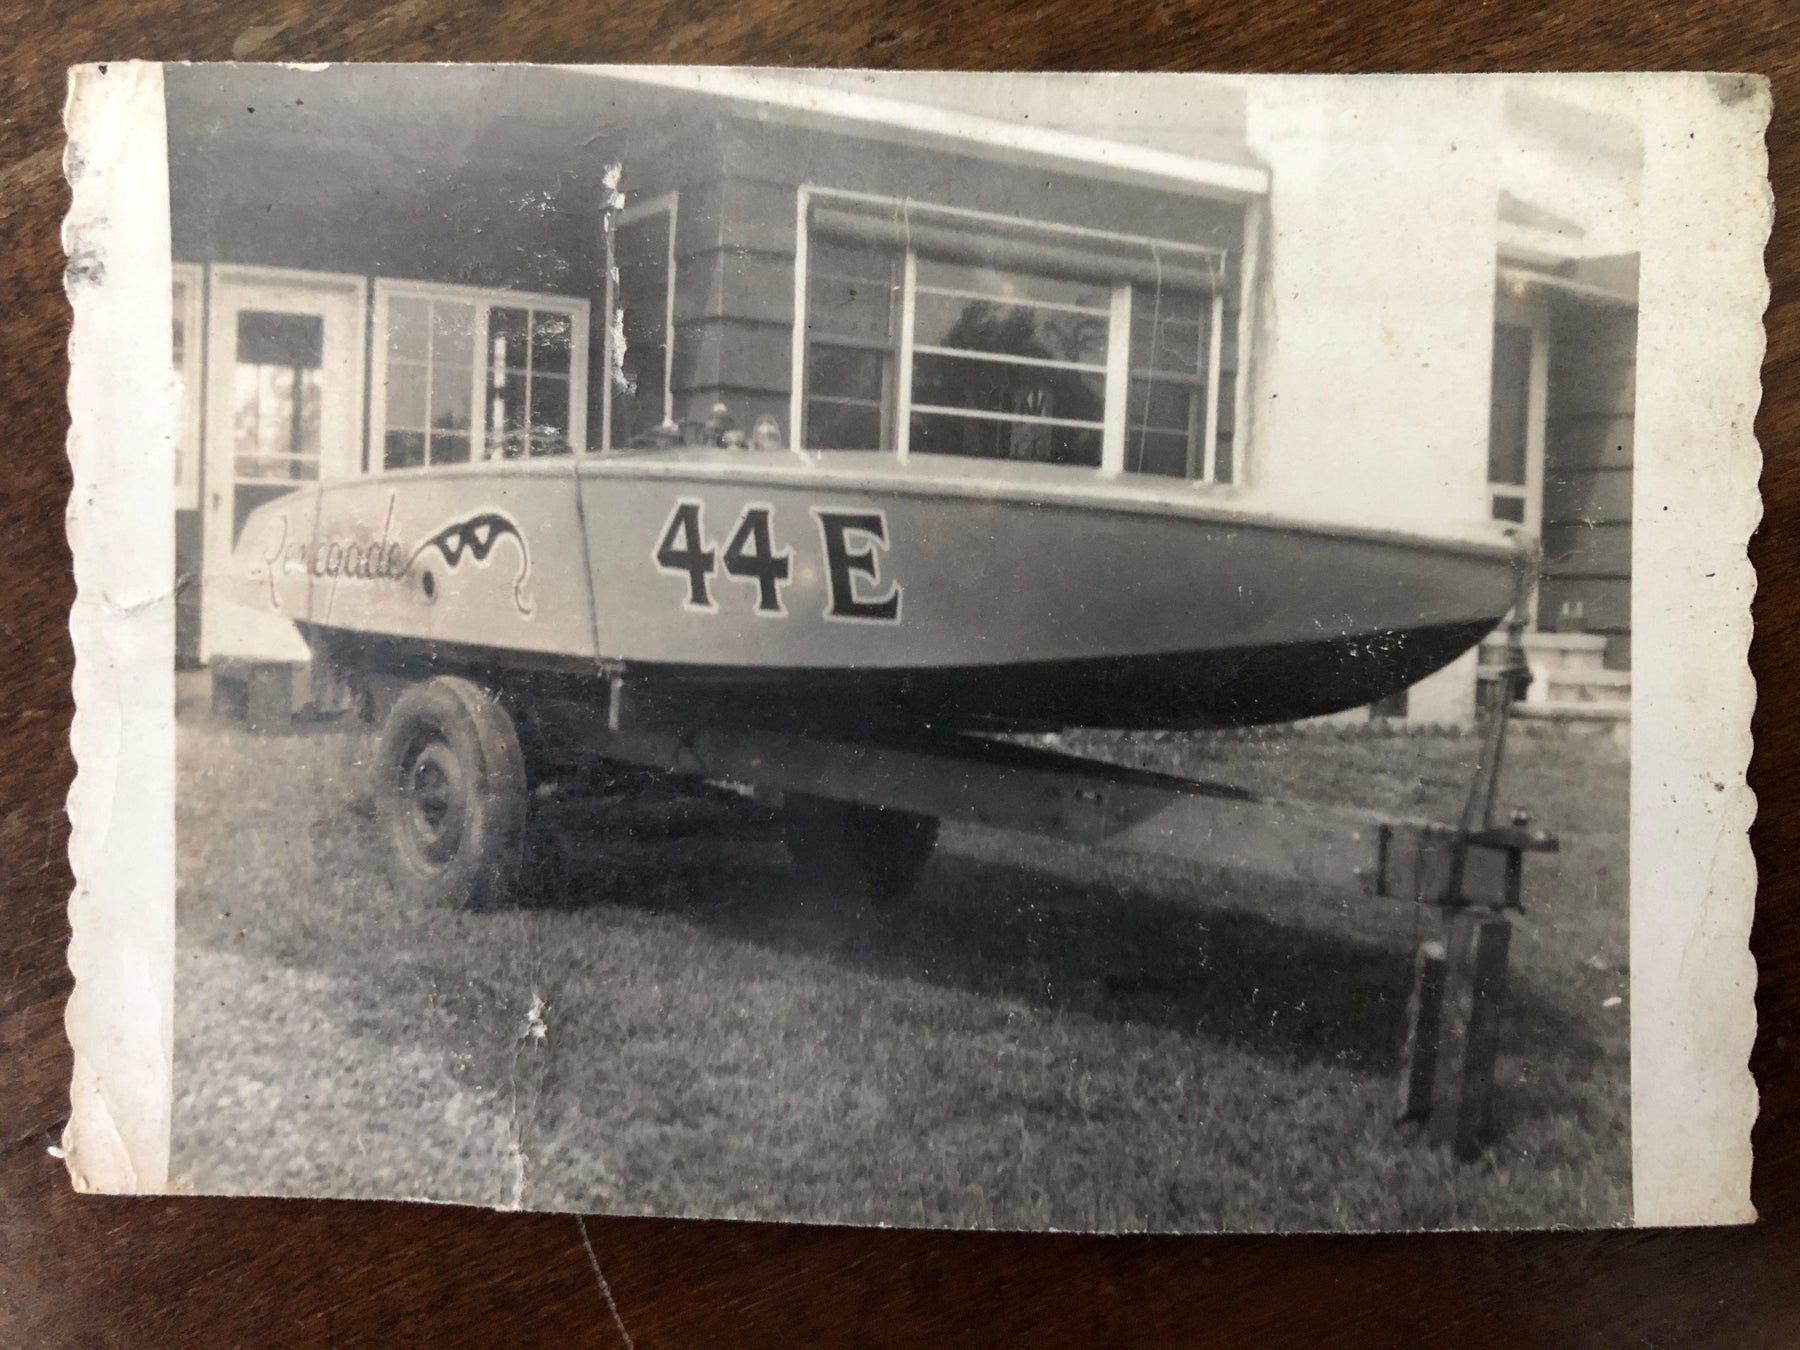 1947 17' Vintage Hydroplane